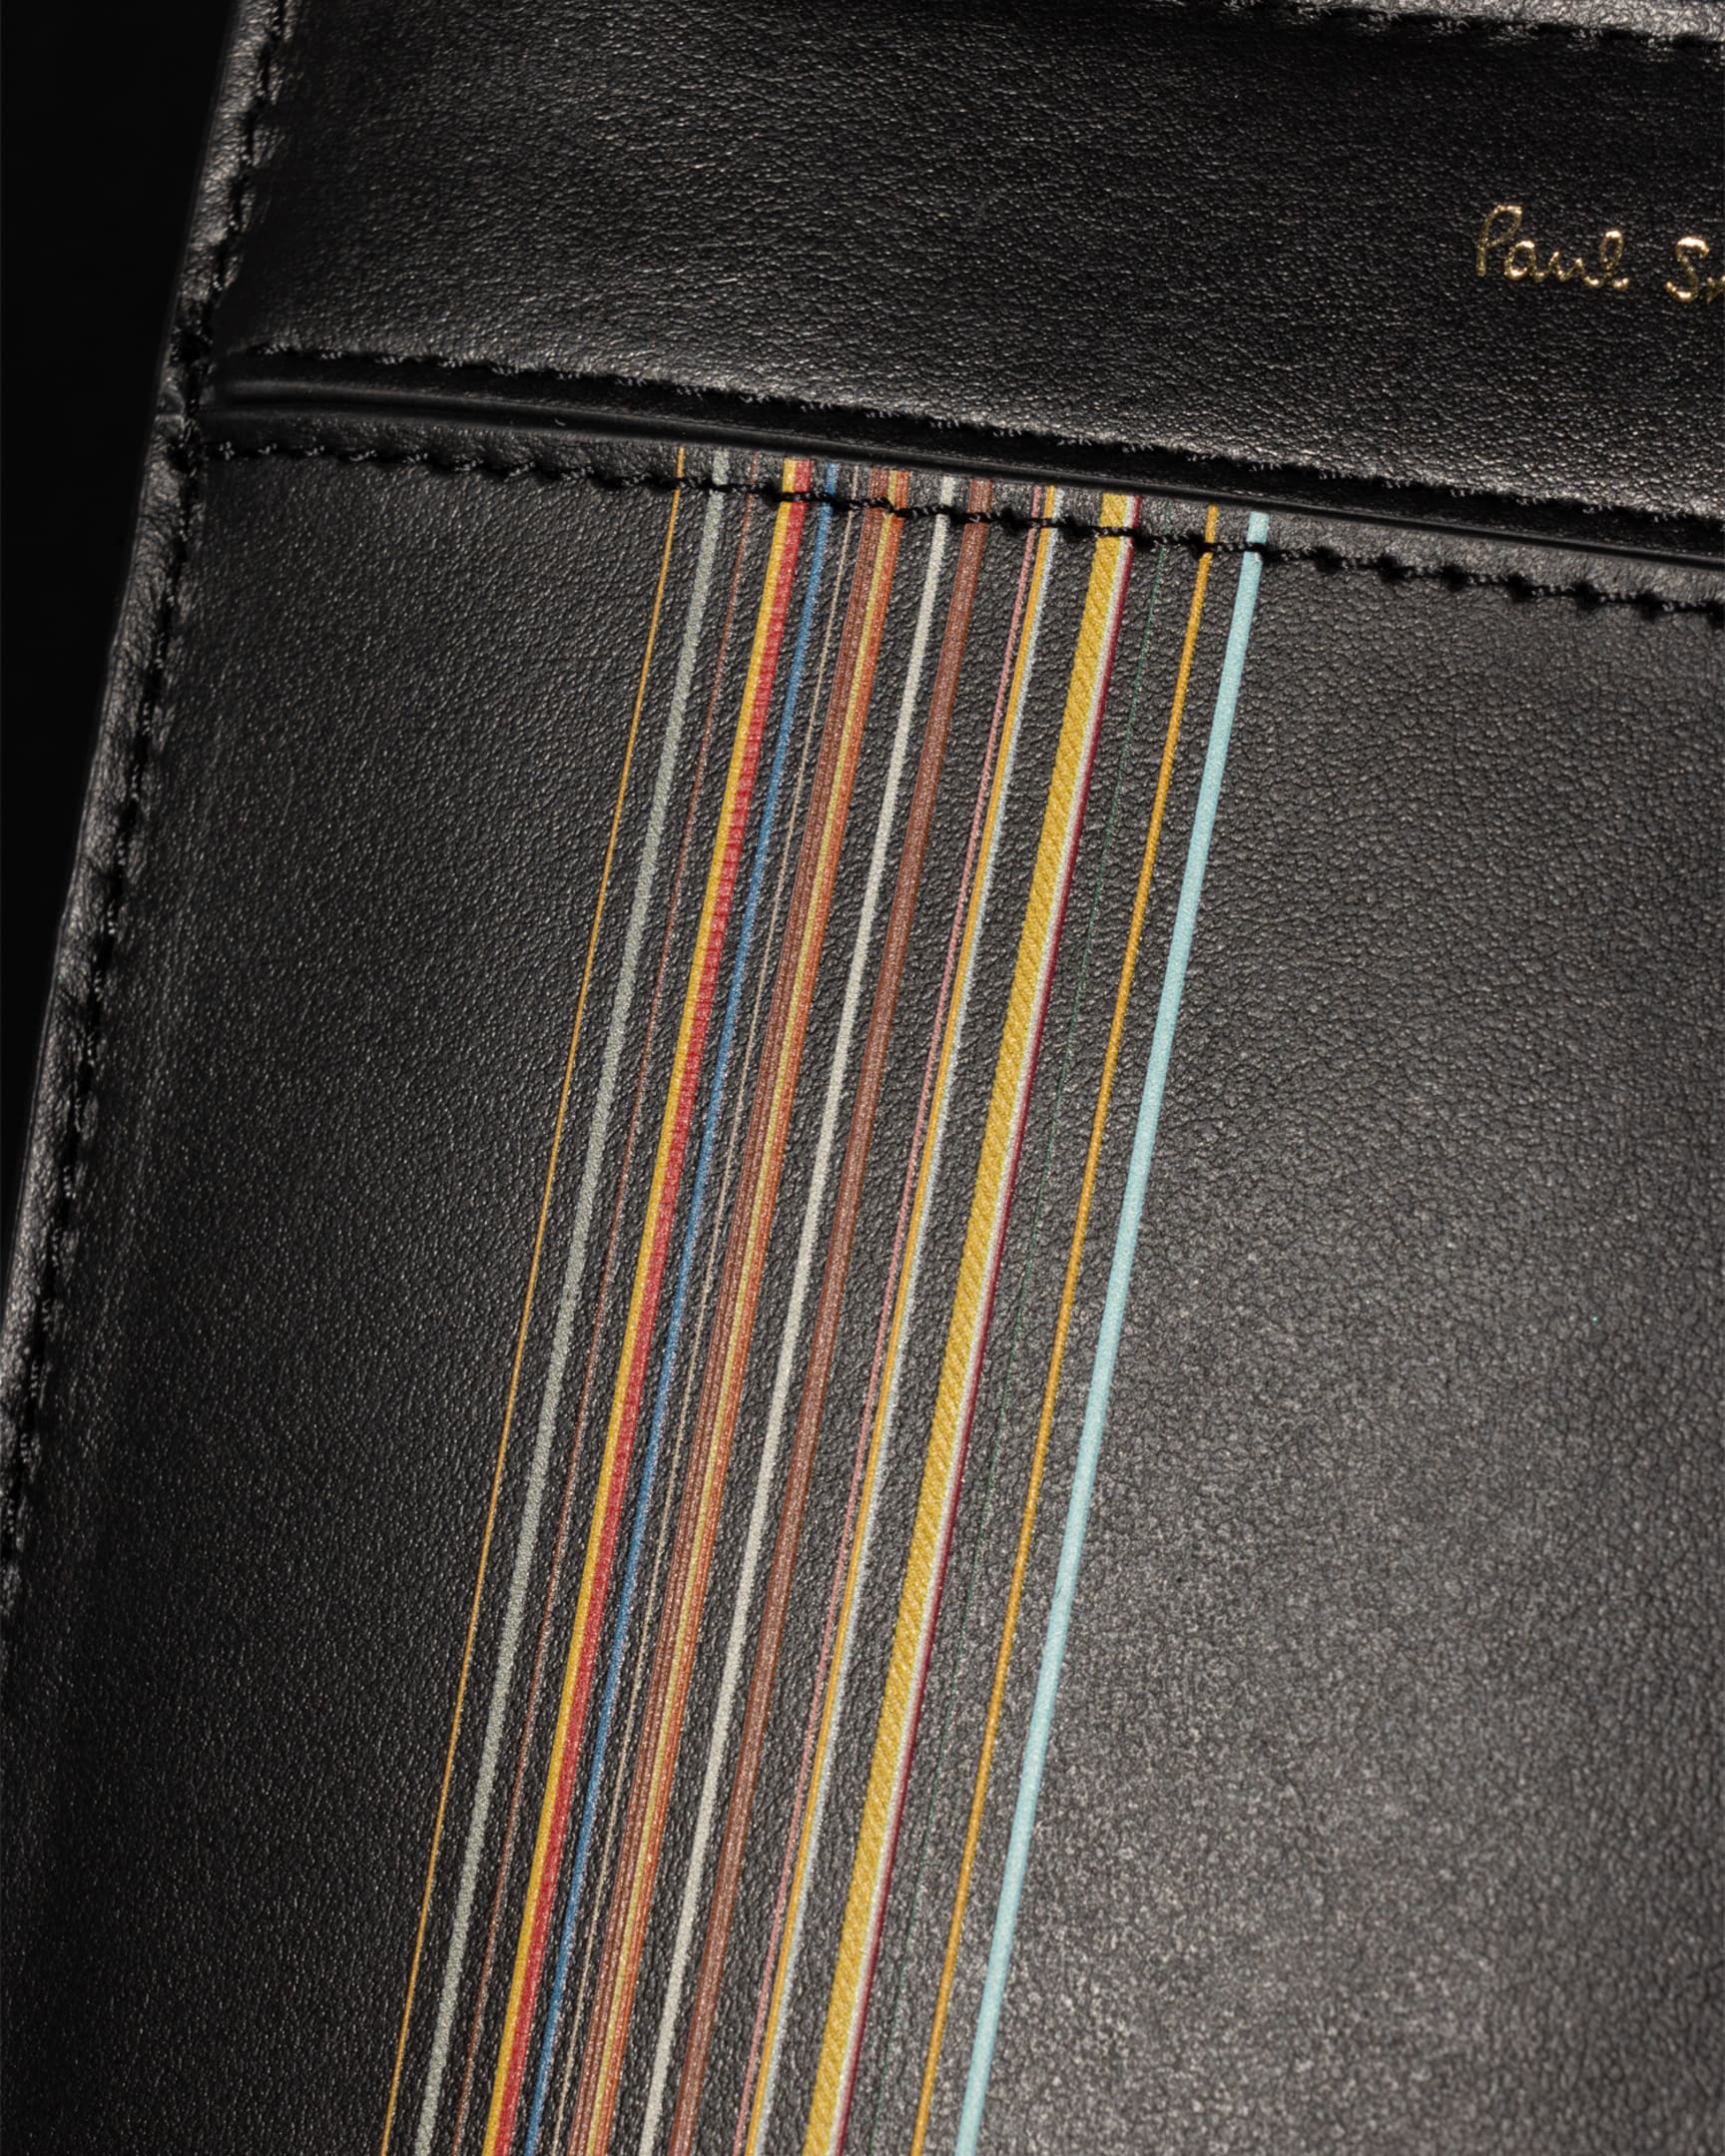 Detail View - Black Leather 'Signature Stripe Block' Cross-Body Bag Paul Smith